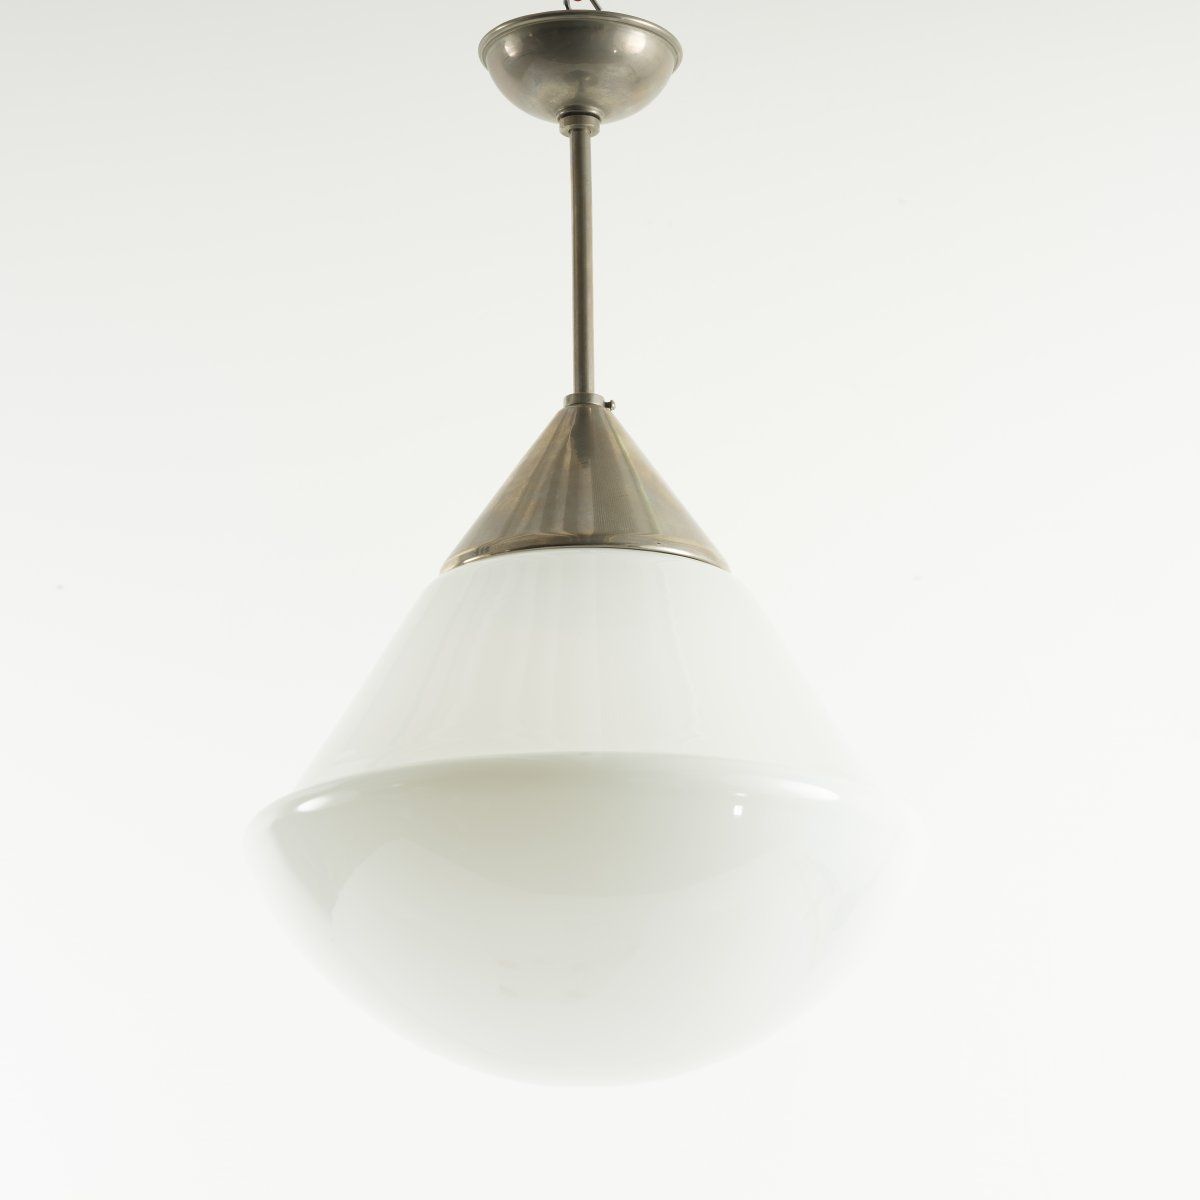 Null Heinrich Siegfried Bormann, '624' pendant light, c. 1939, H. 66 cm (with su&hellip;